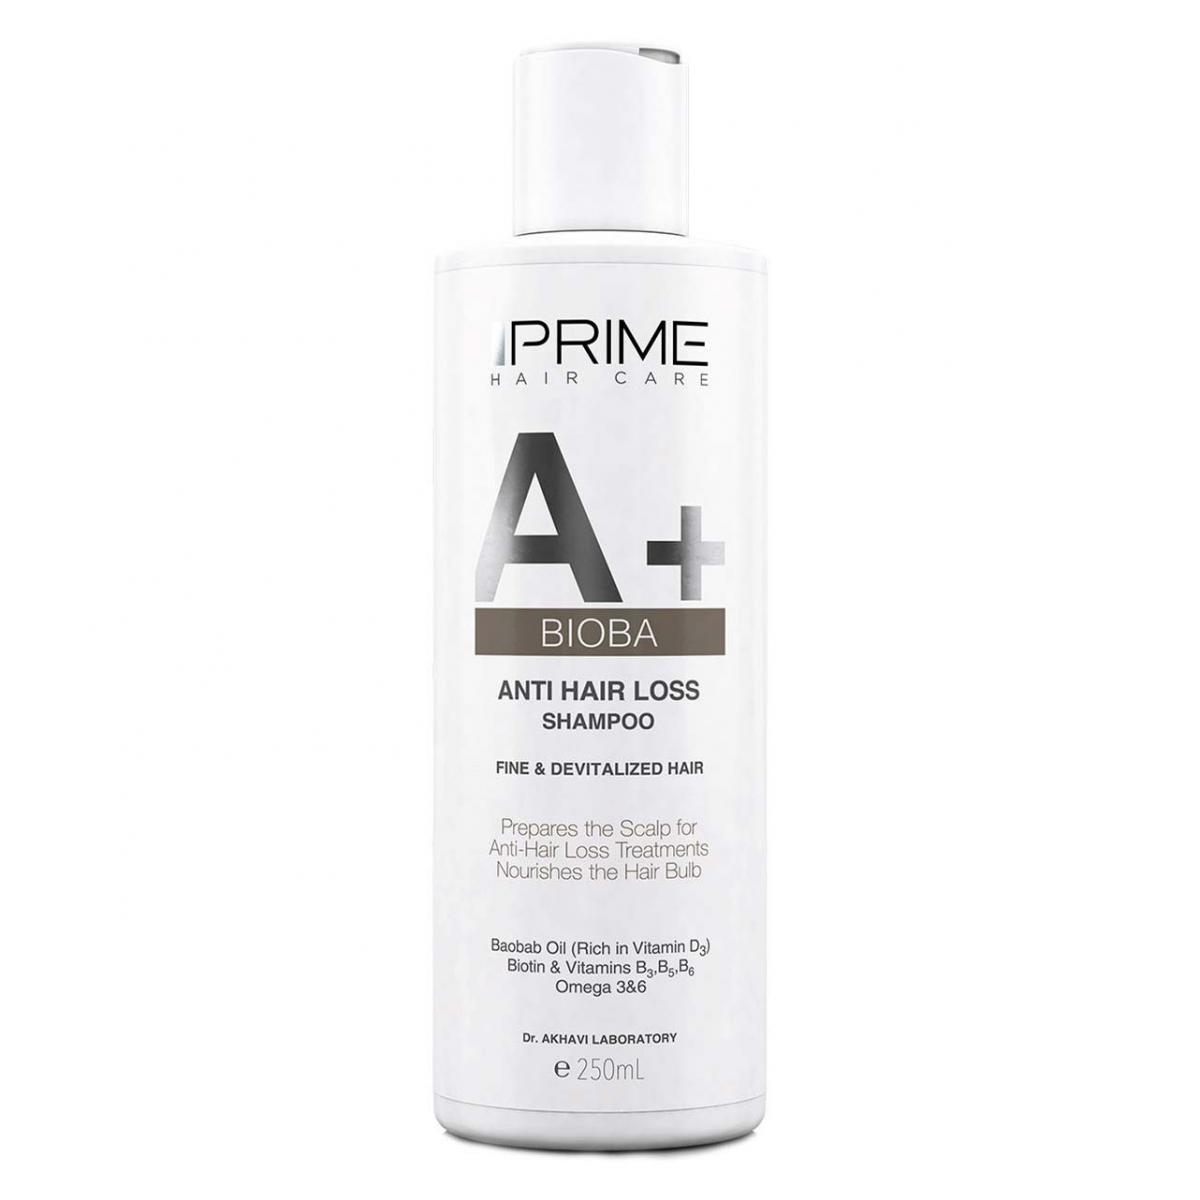 شامپو تقویت کننده و ضد ریزش مو مدل A+ - Prime Anti Hair Loss Shampoo 250ml